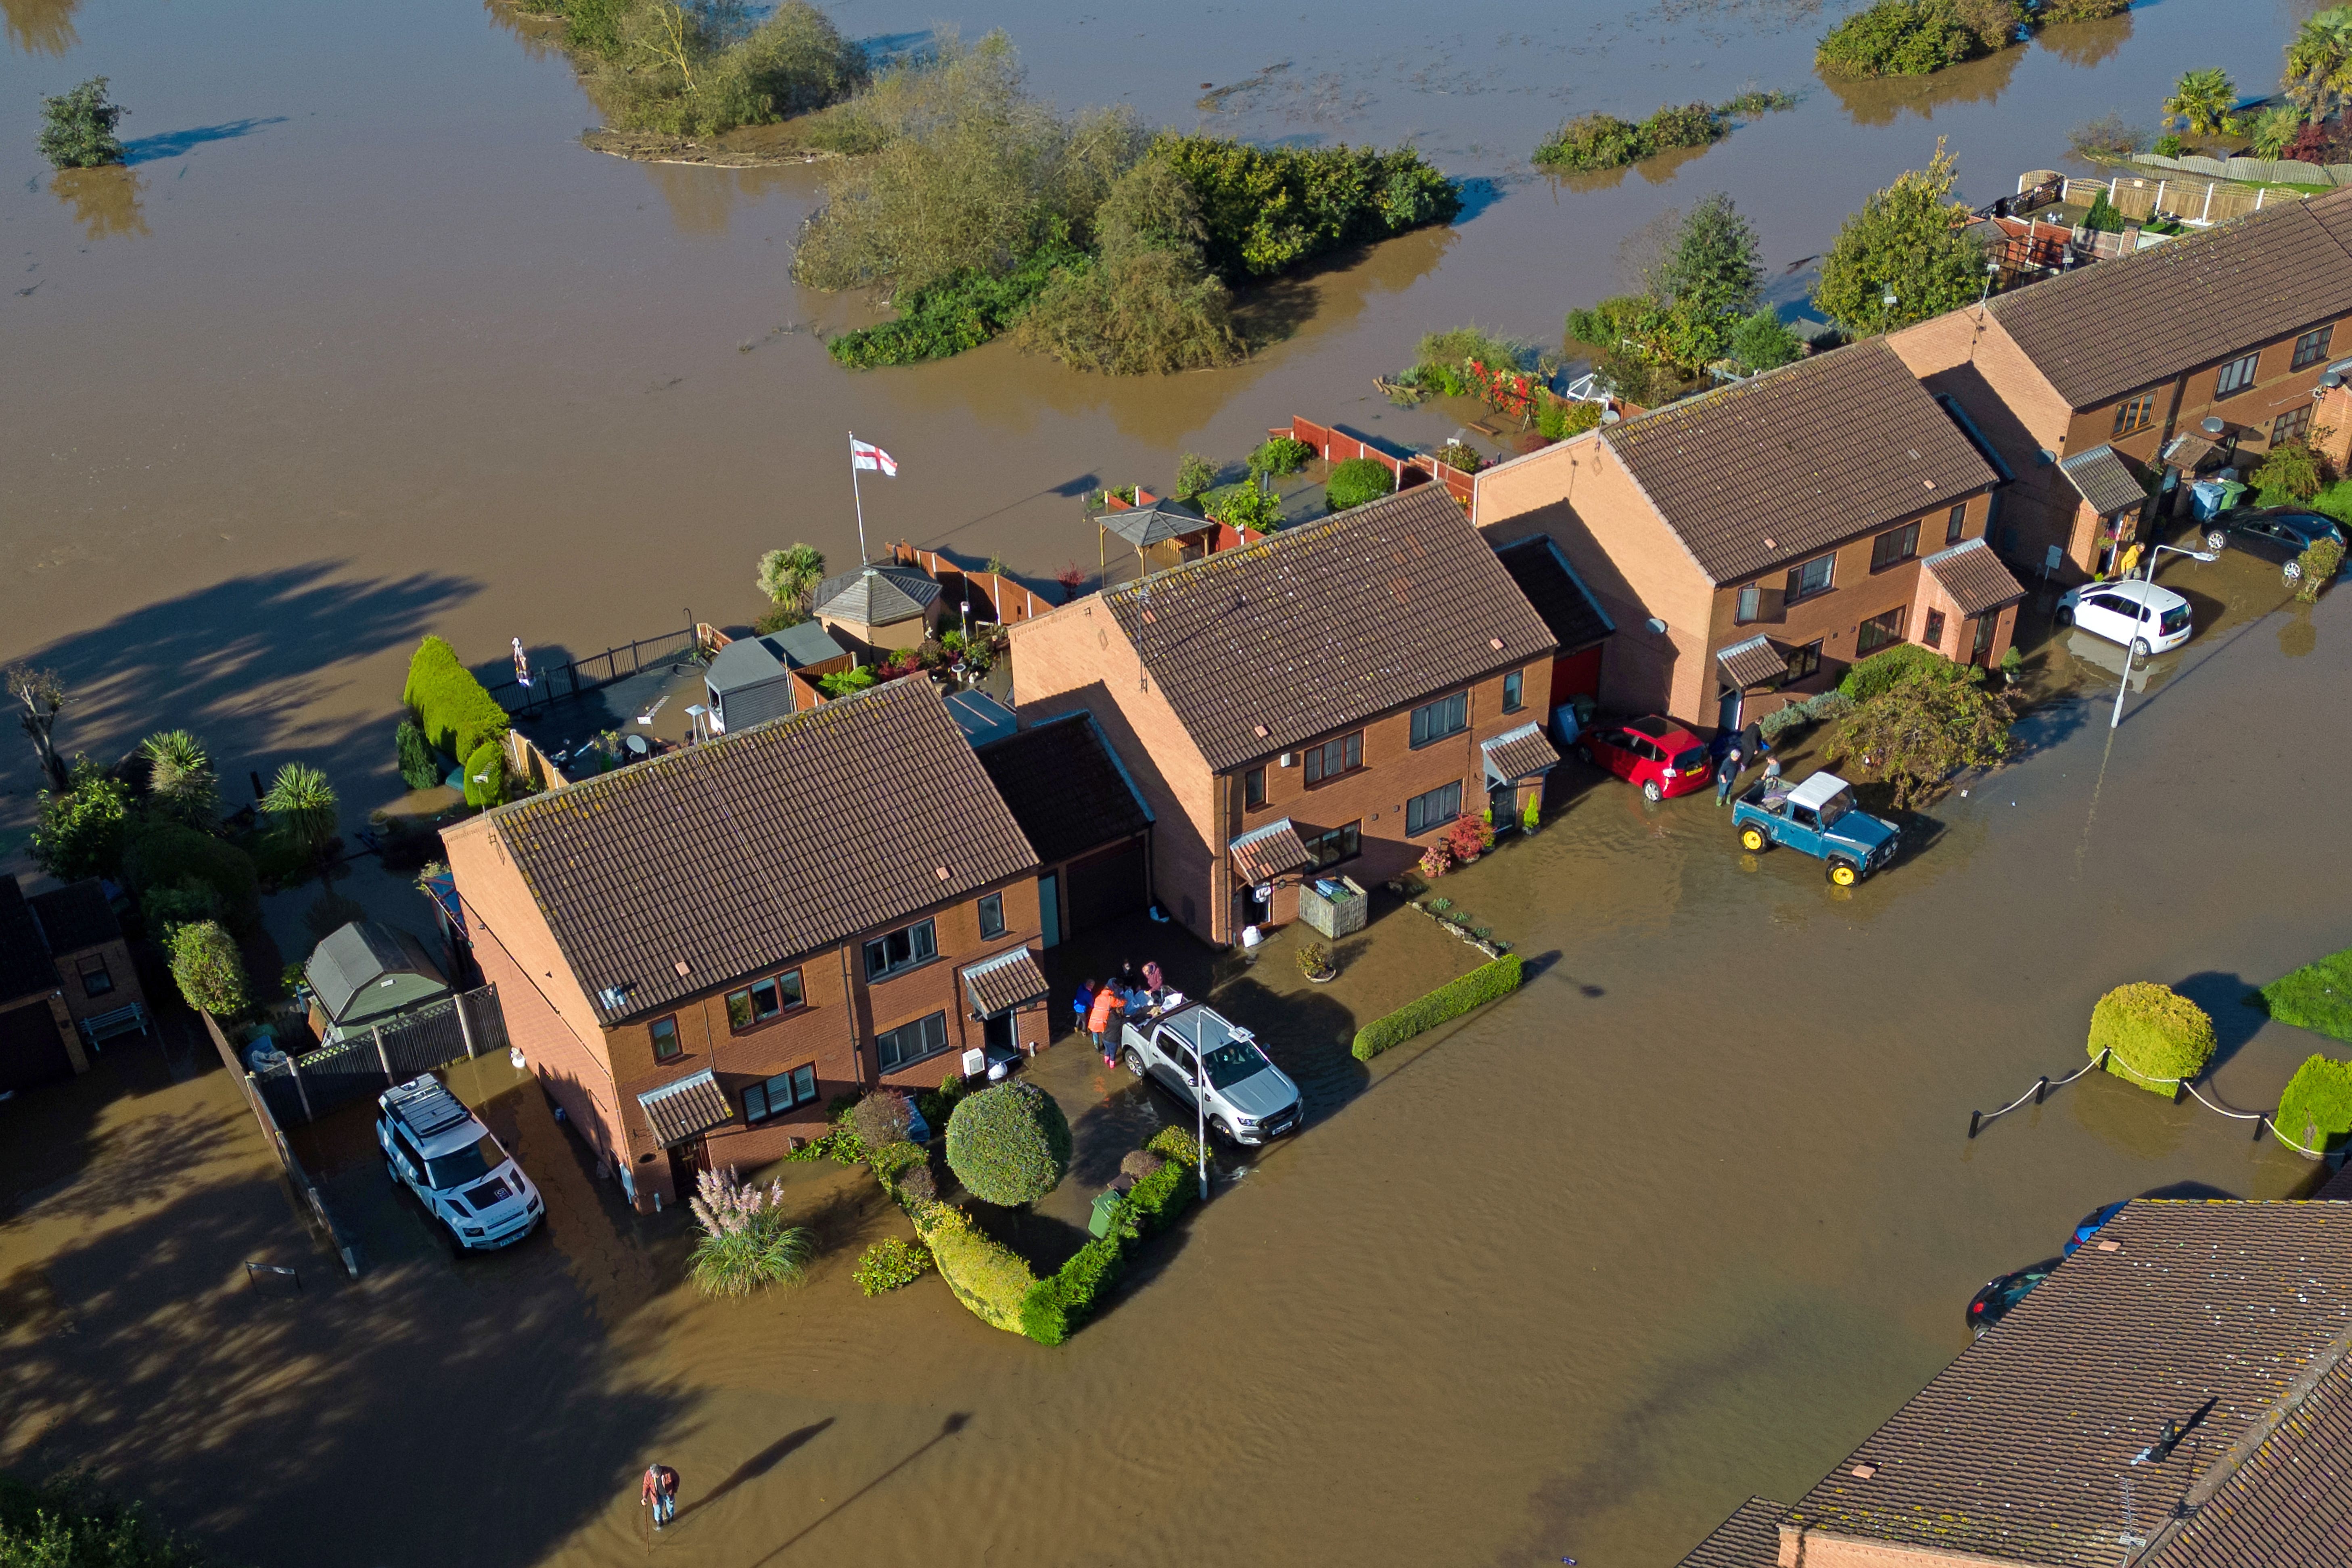 Retford in Nottinghamshire was flooded after Storm Babet battered the UK